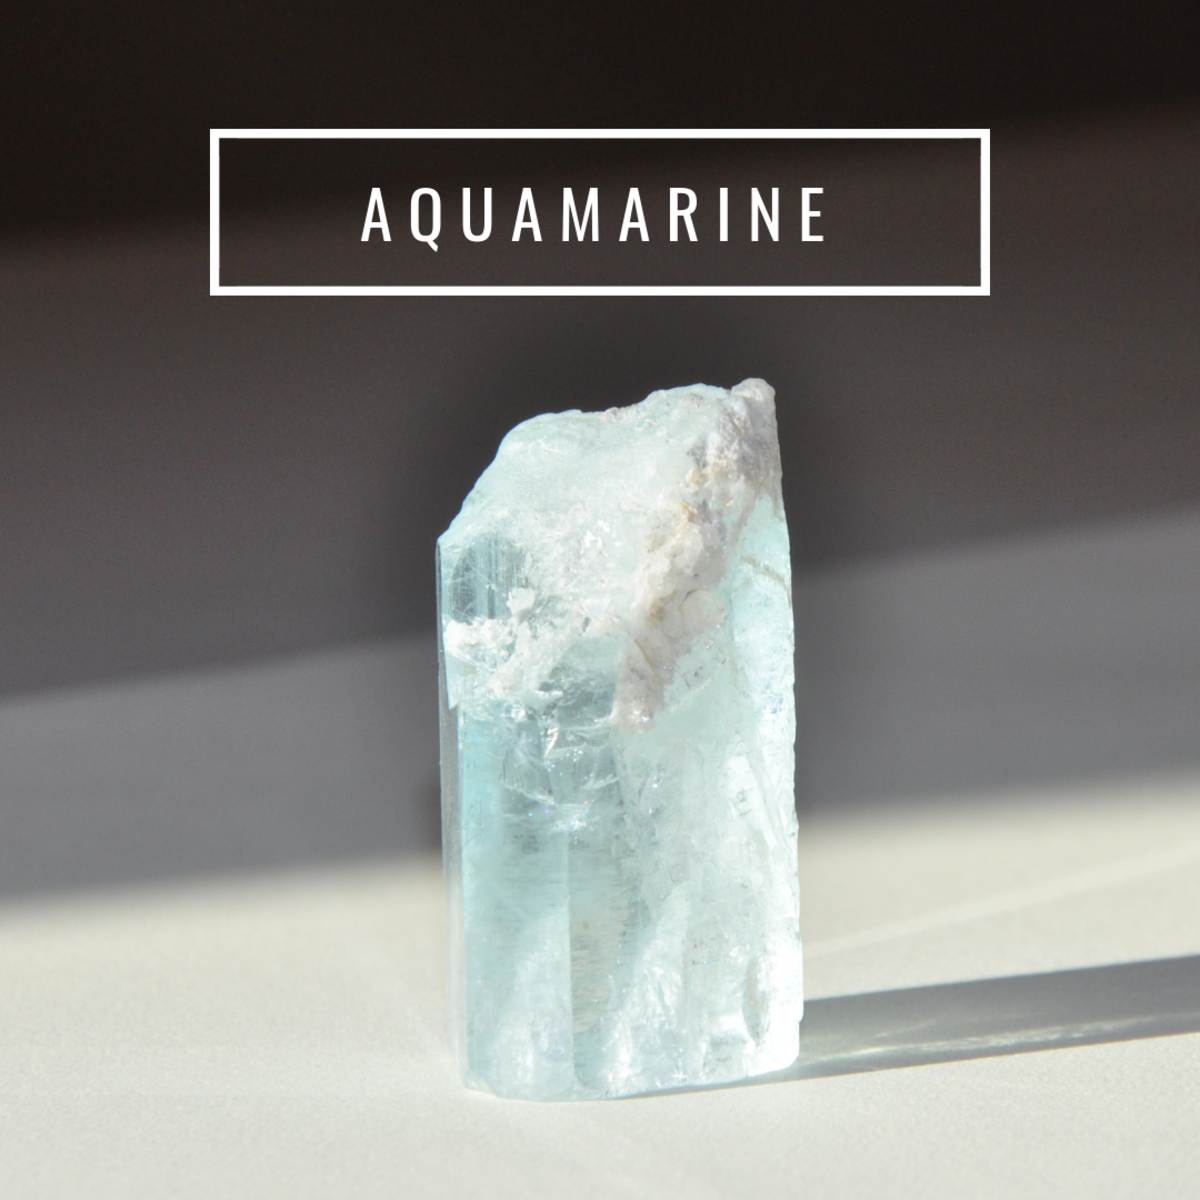 Aquamarine promotes joy and happiness.